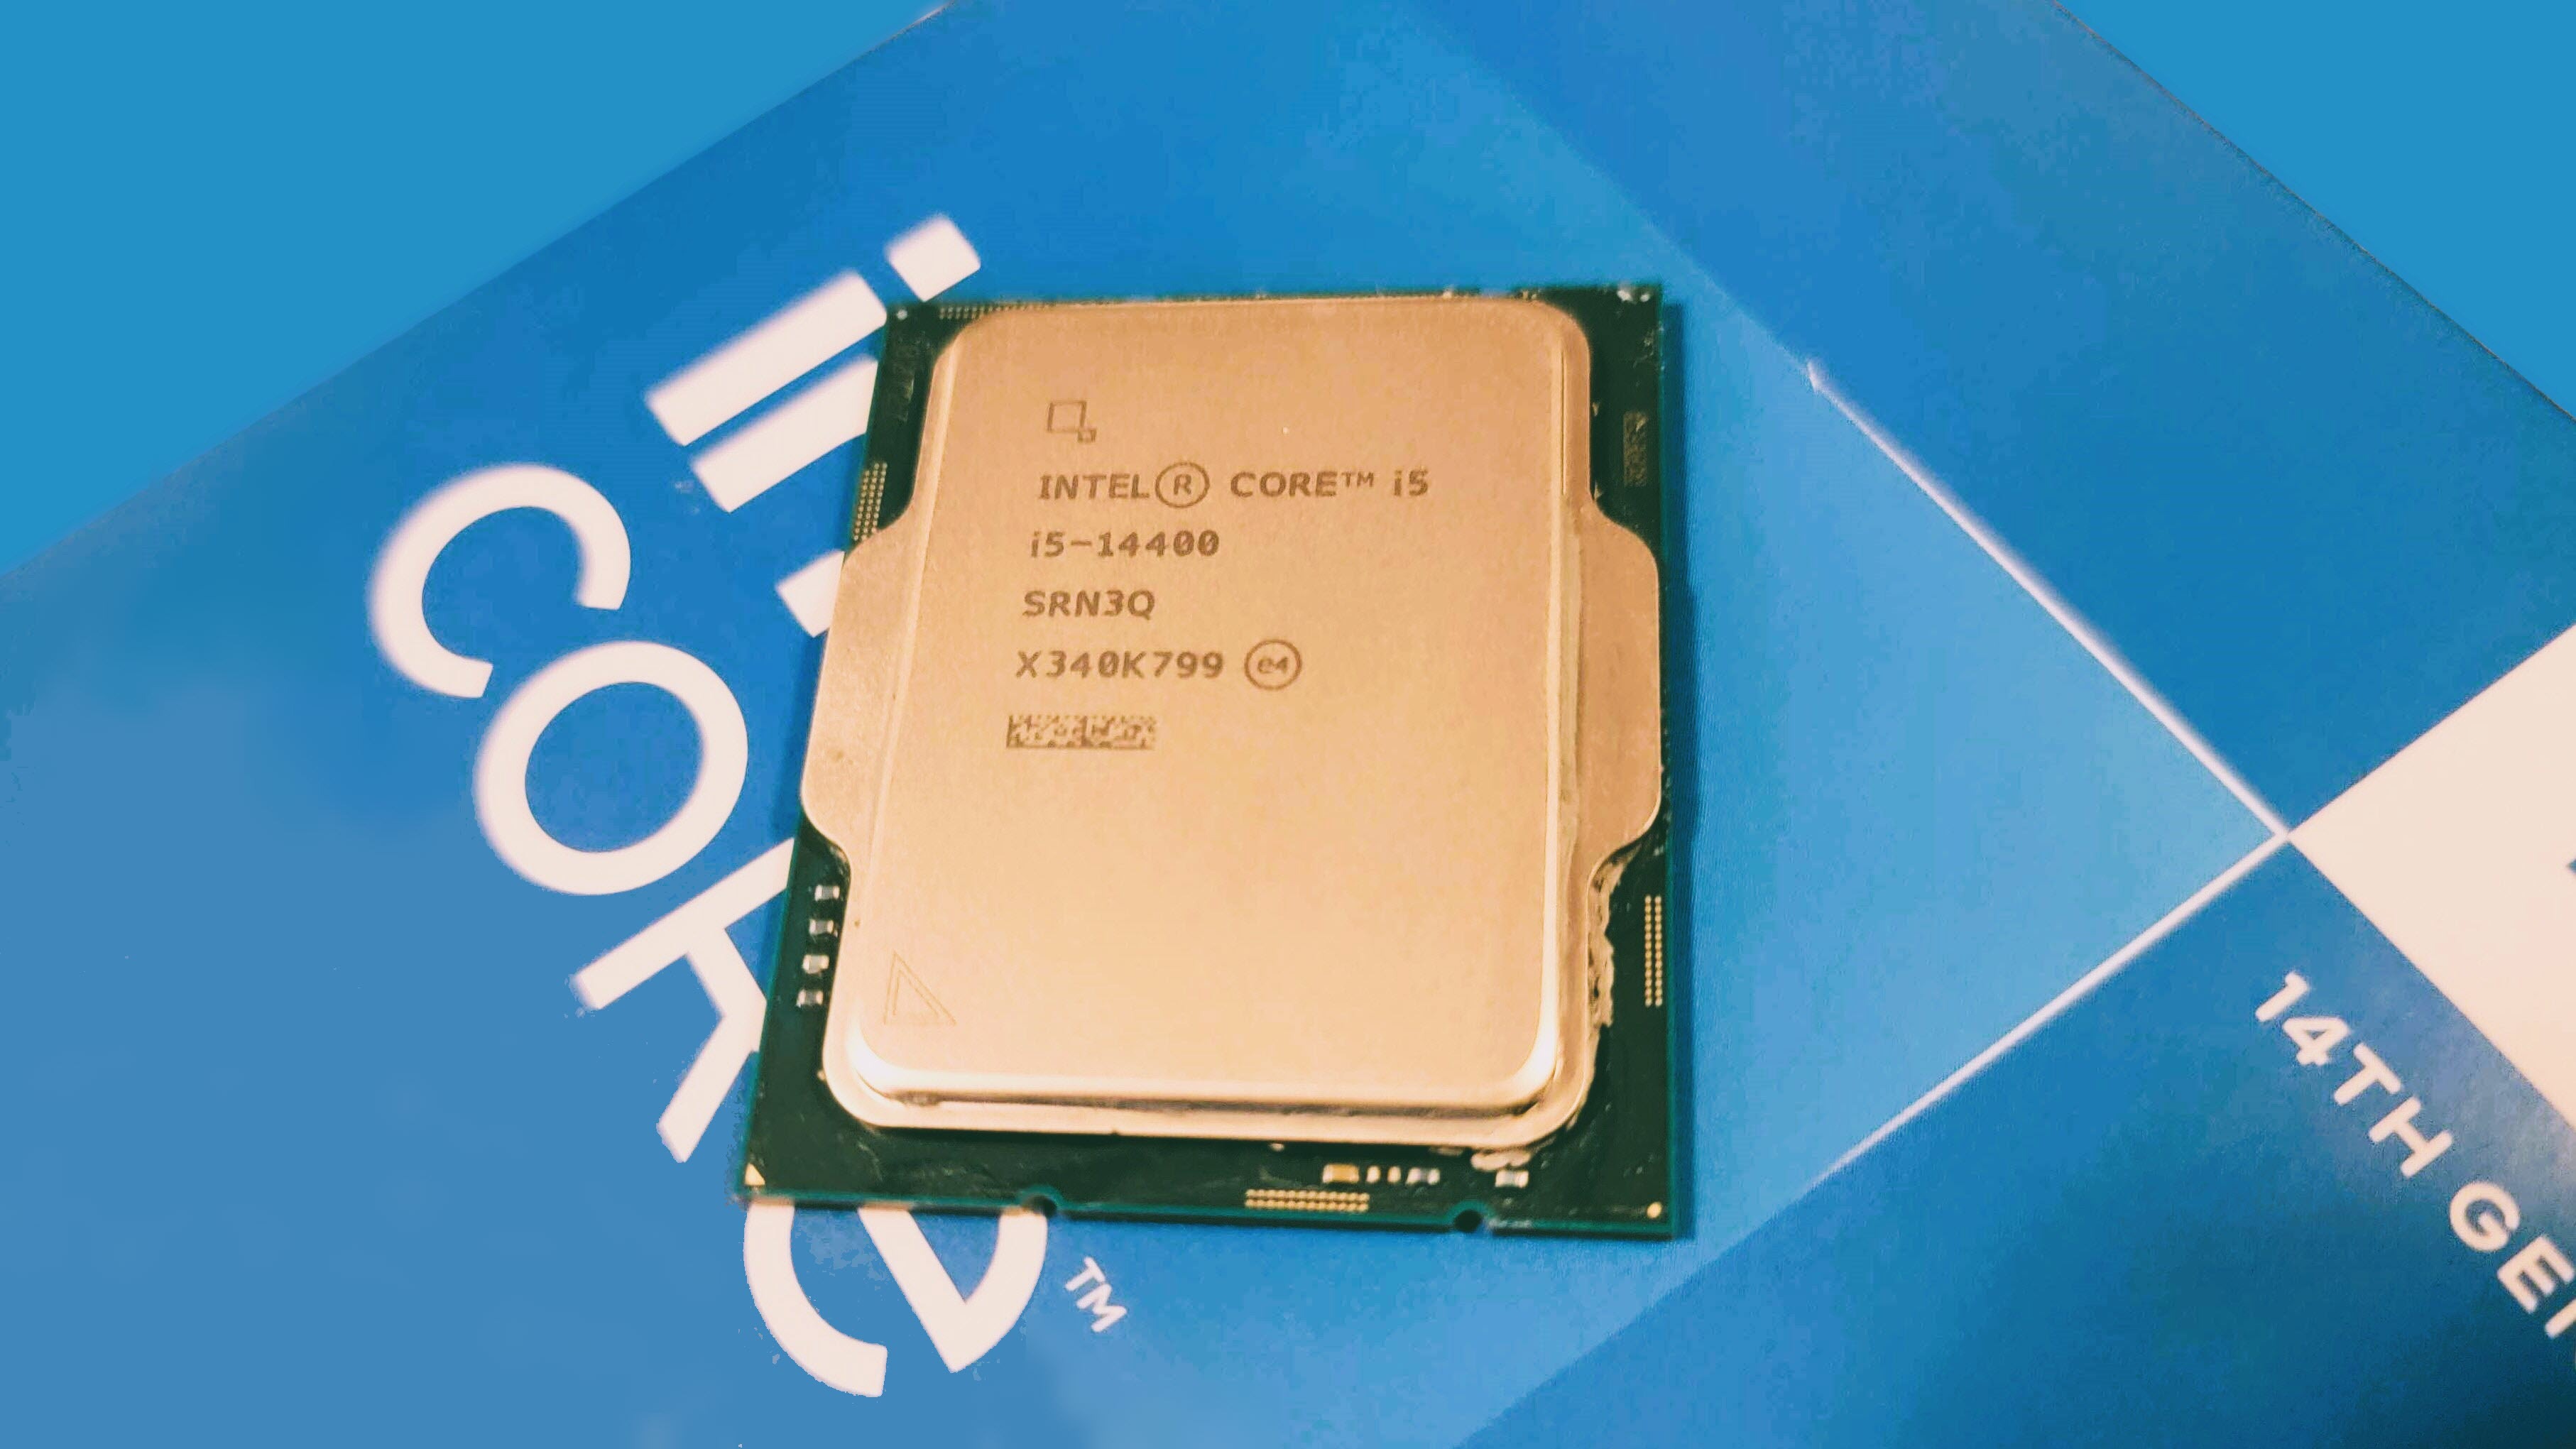 Intel Core i5-14400 review: Intel's value gaming chip falls behind AMD